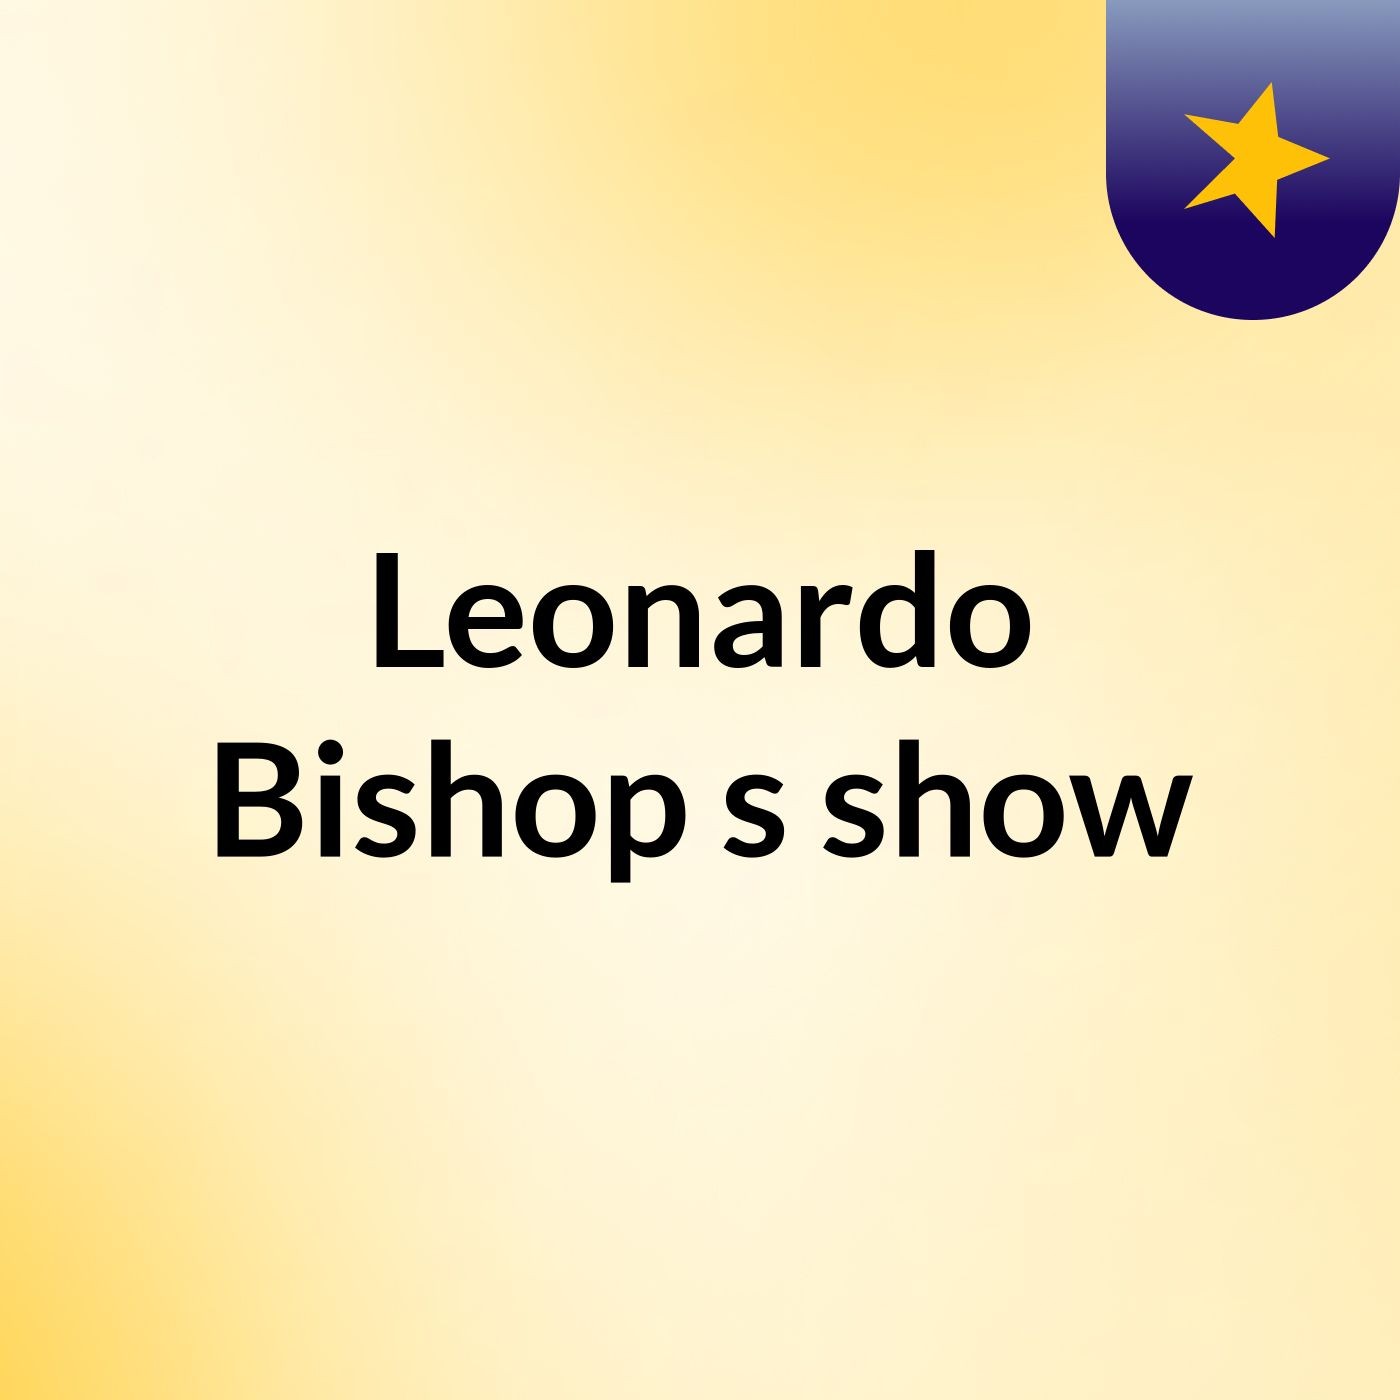 Leonardo Bishop's show